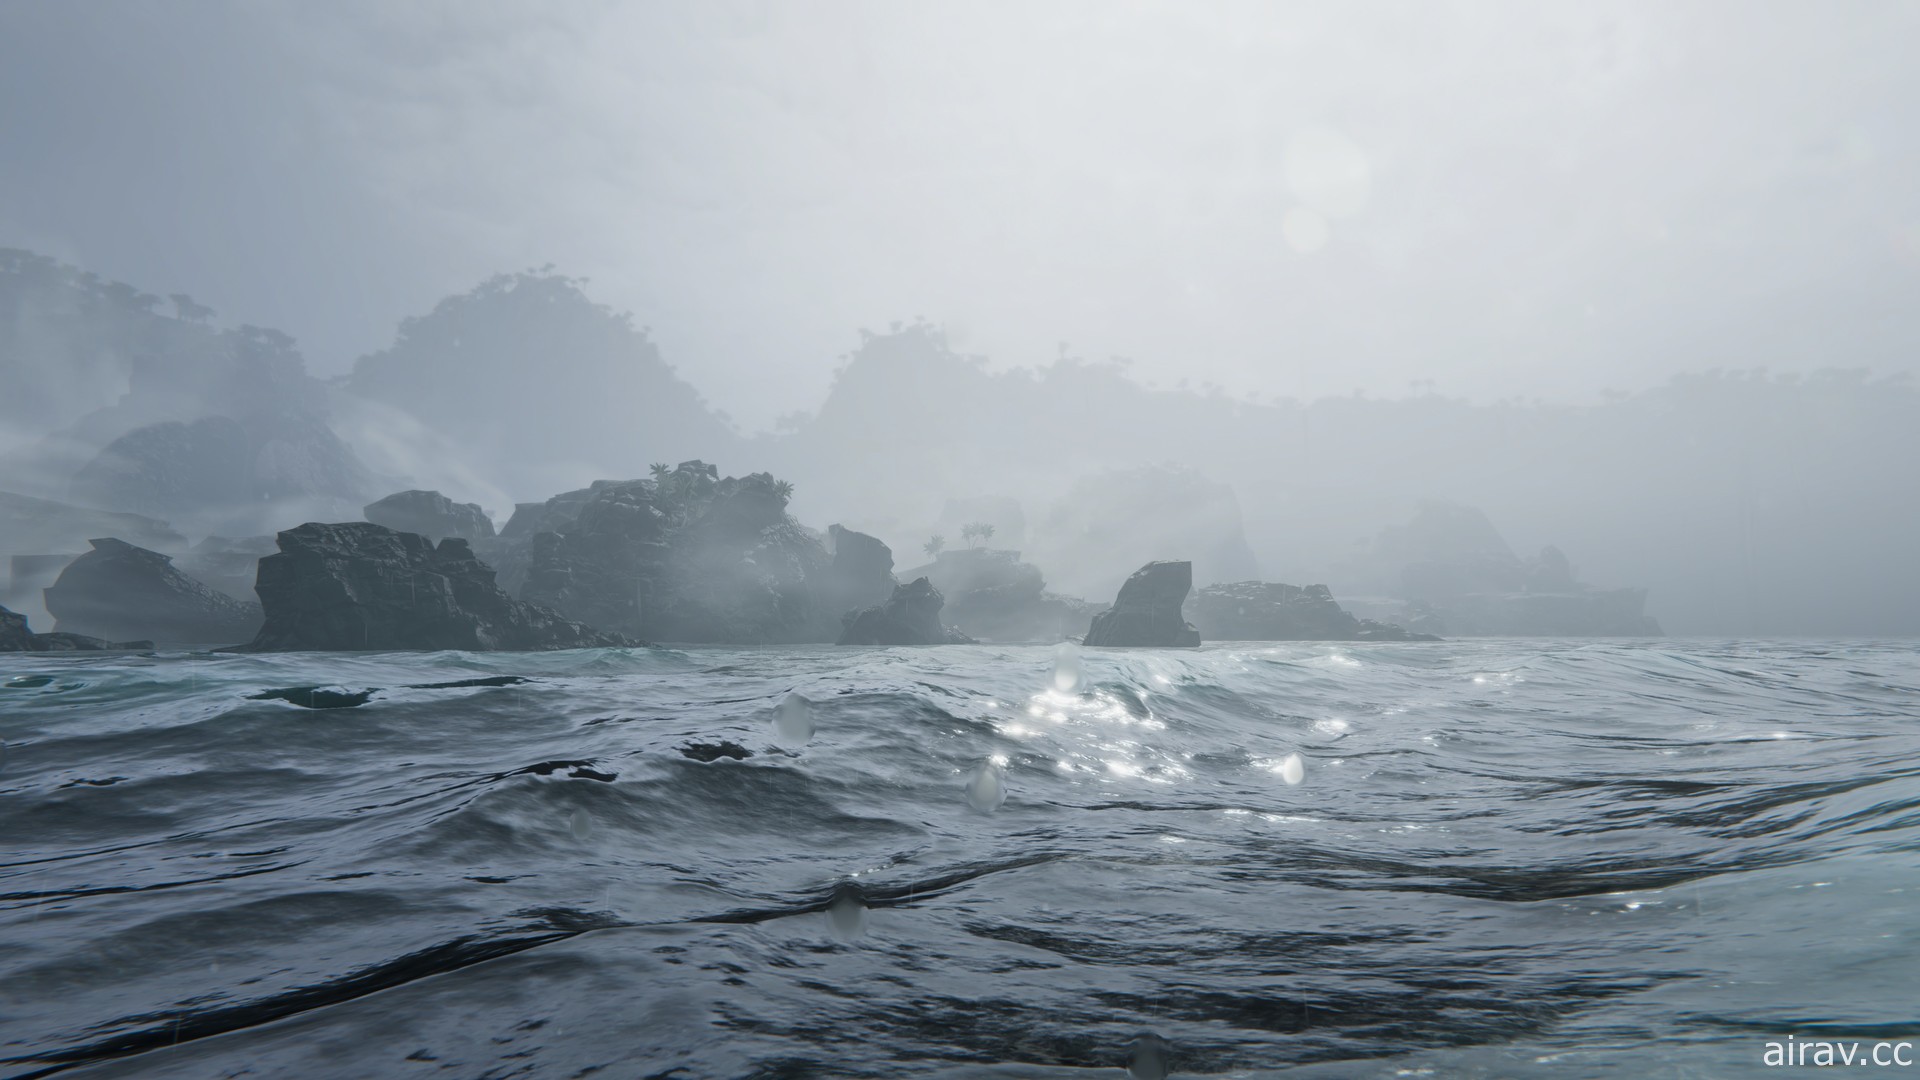 【E3 21】《凶恶计画 Project Ferocious》亮相 探索充满危机的史前生物岛屿